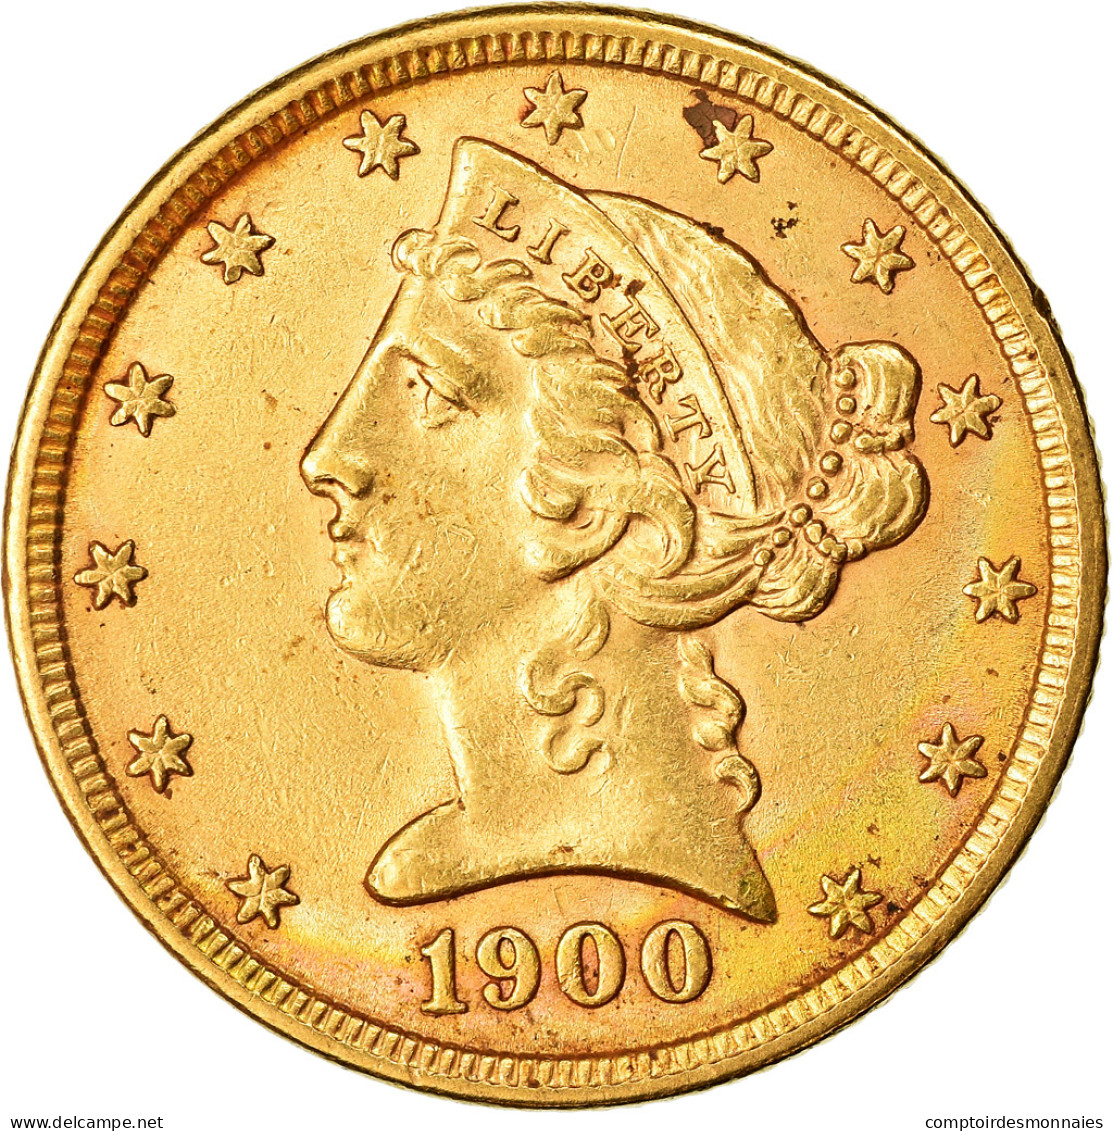 Monnaie, États-Unis, Coronet Head, $5, Half Eagle, 1900, U.S. Mint - 5$ - Half Eagle - 1866-1908: Coronet Head